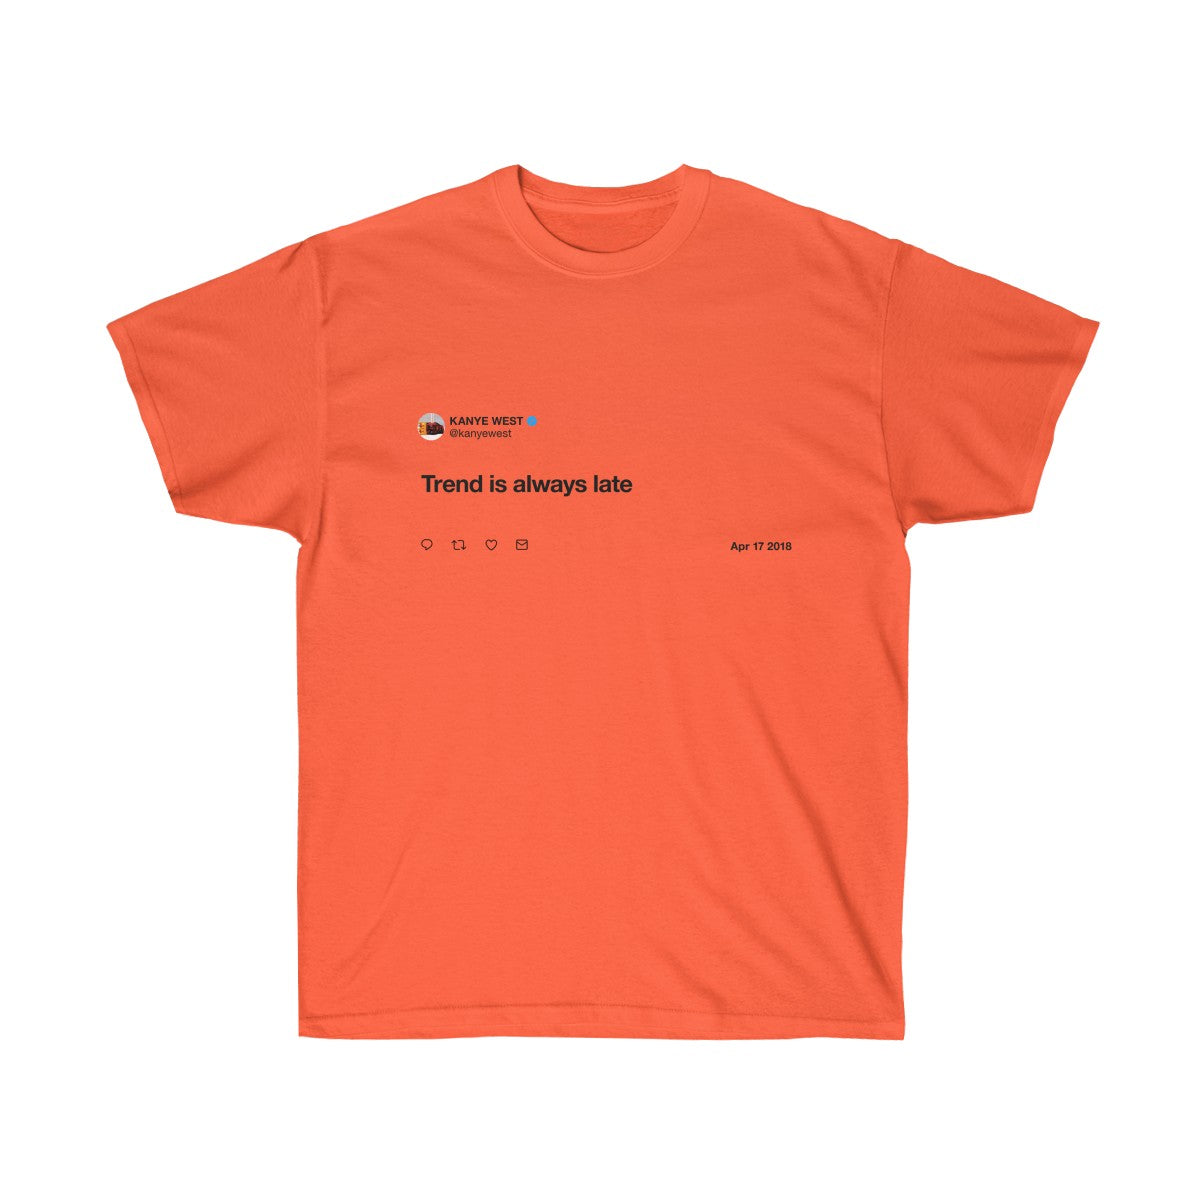 Trend is always late - Kanye West T-Shirt-Orange-S-Archethype